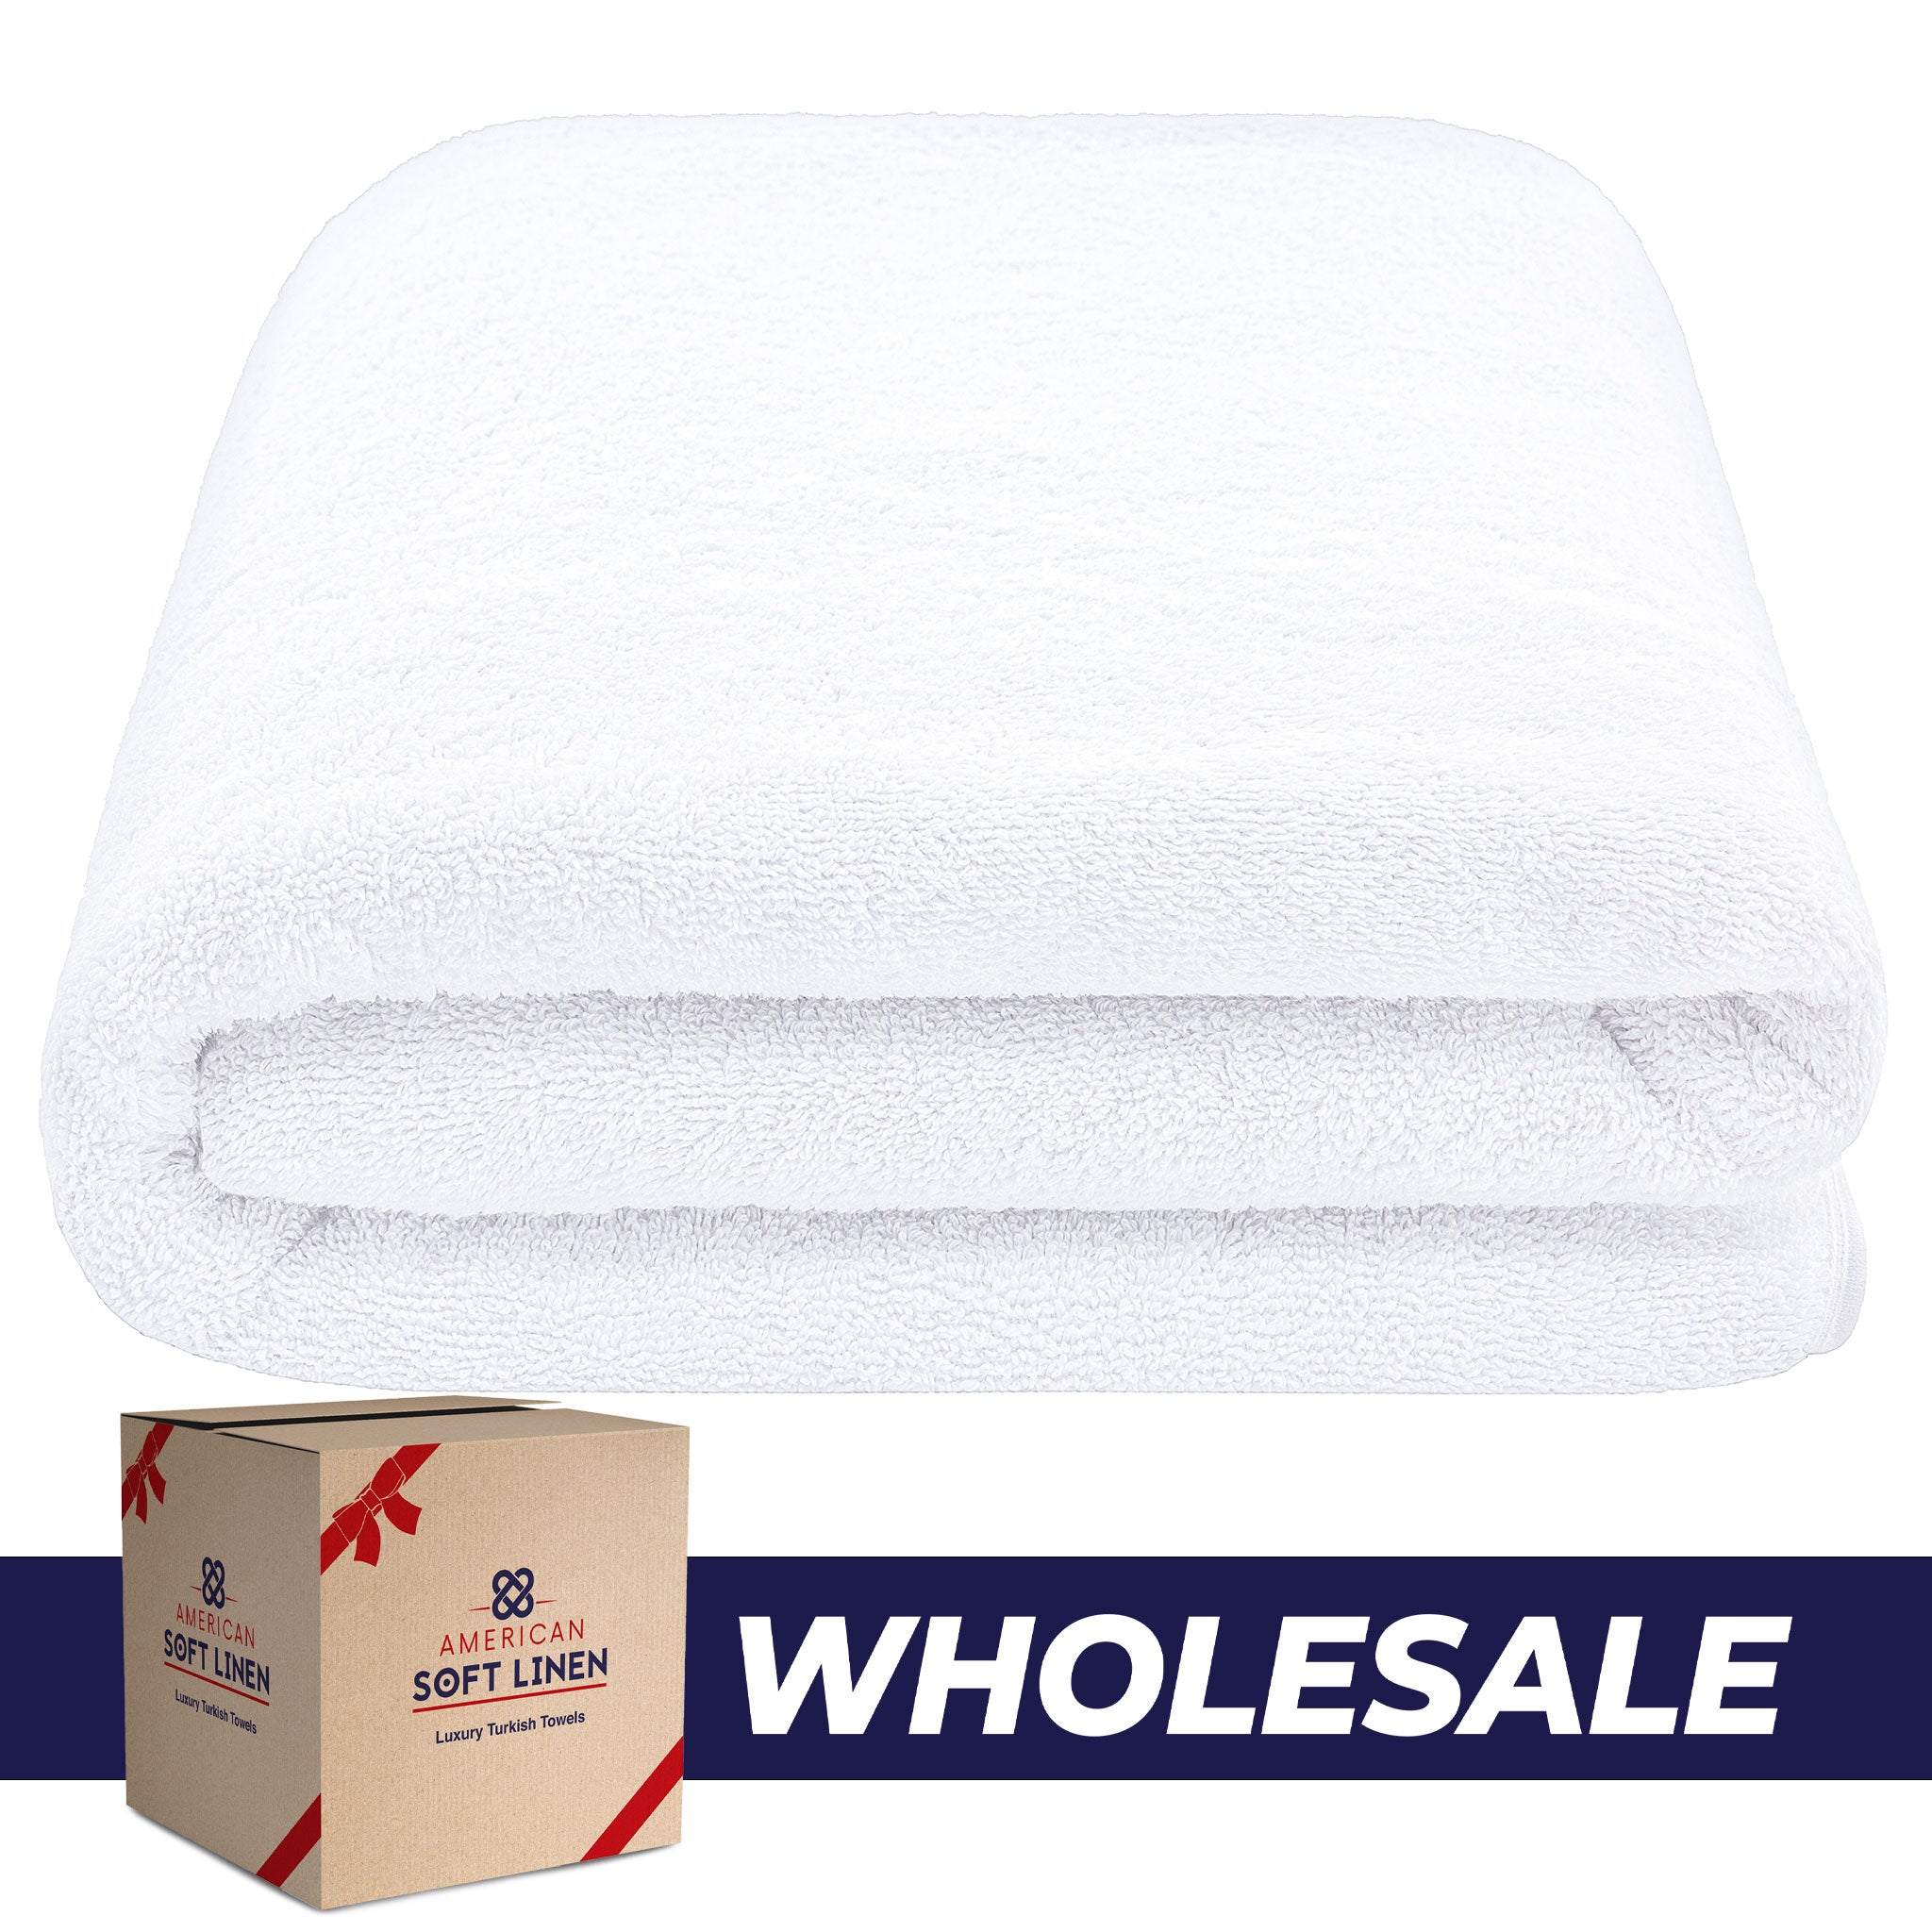 Extra Large Oversized Bath Towel 100% Cotton Turkish Towels 